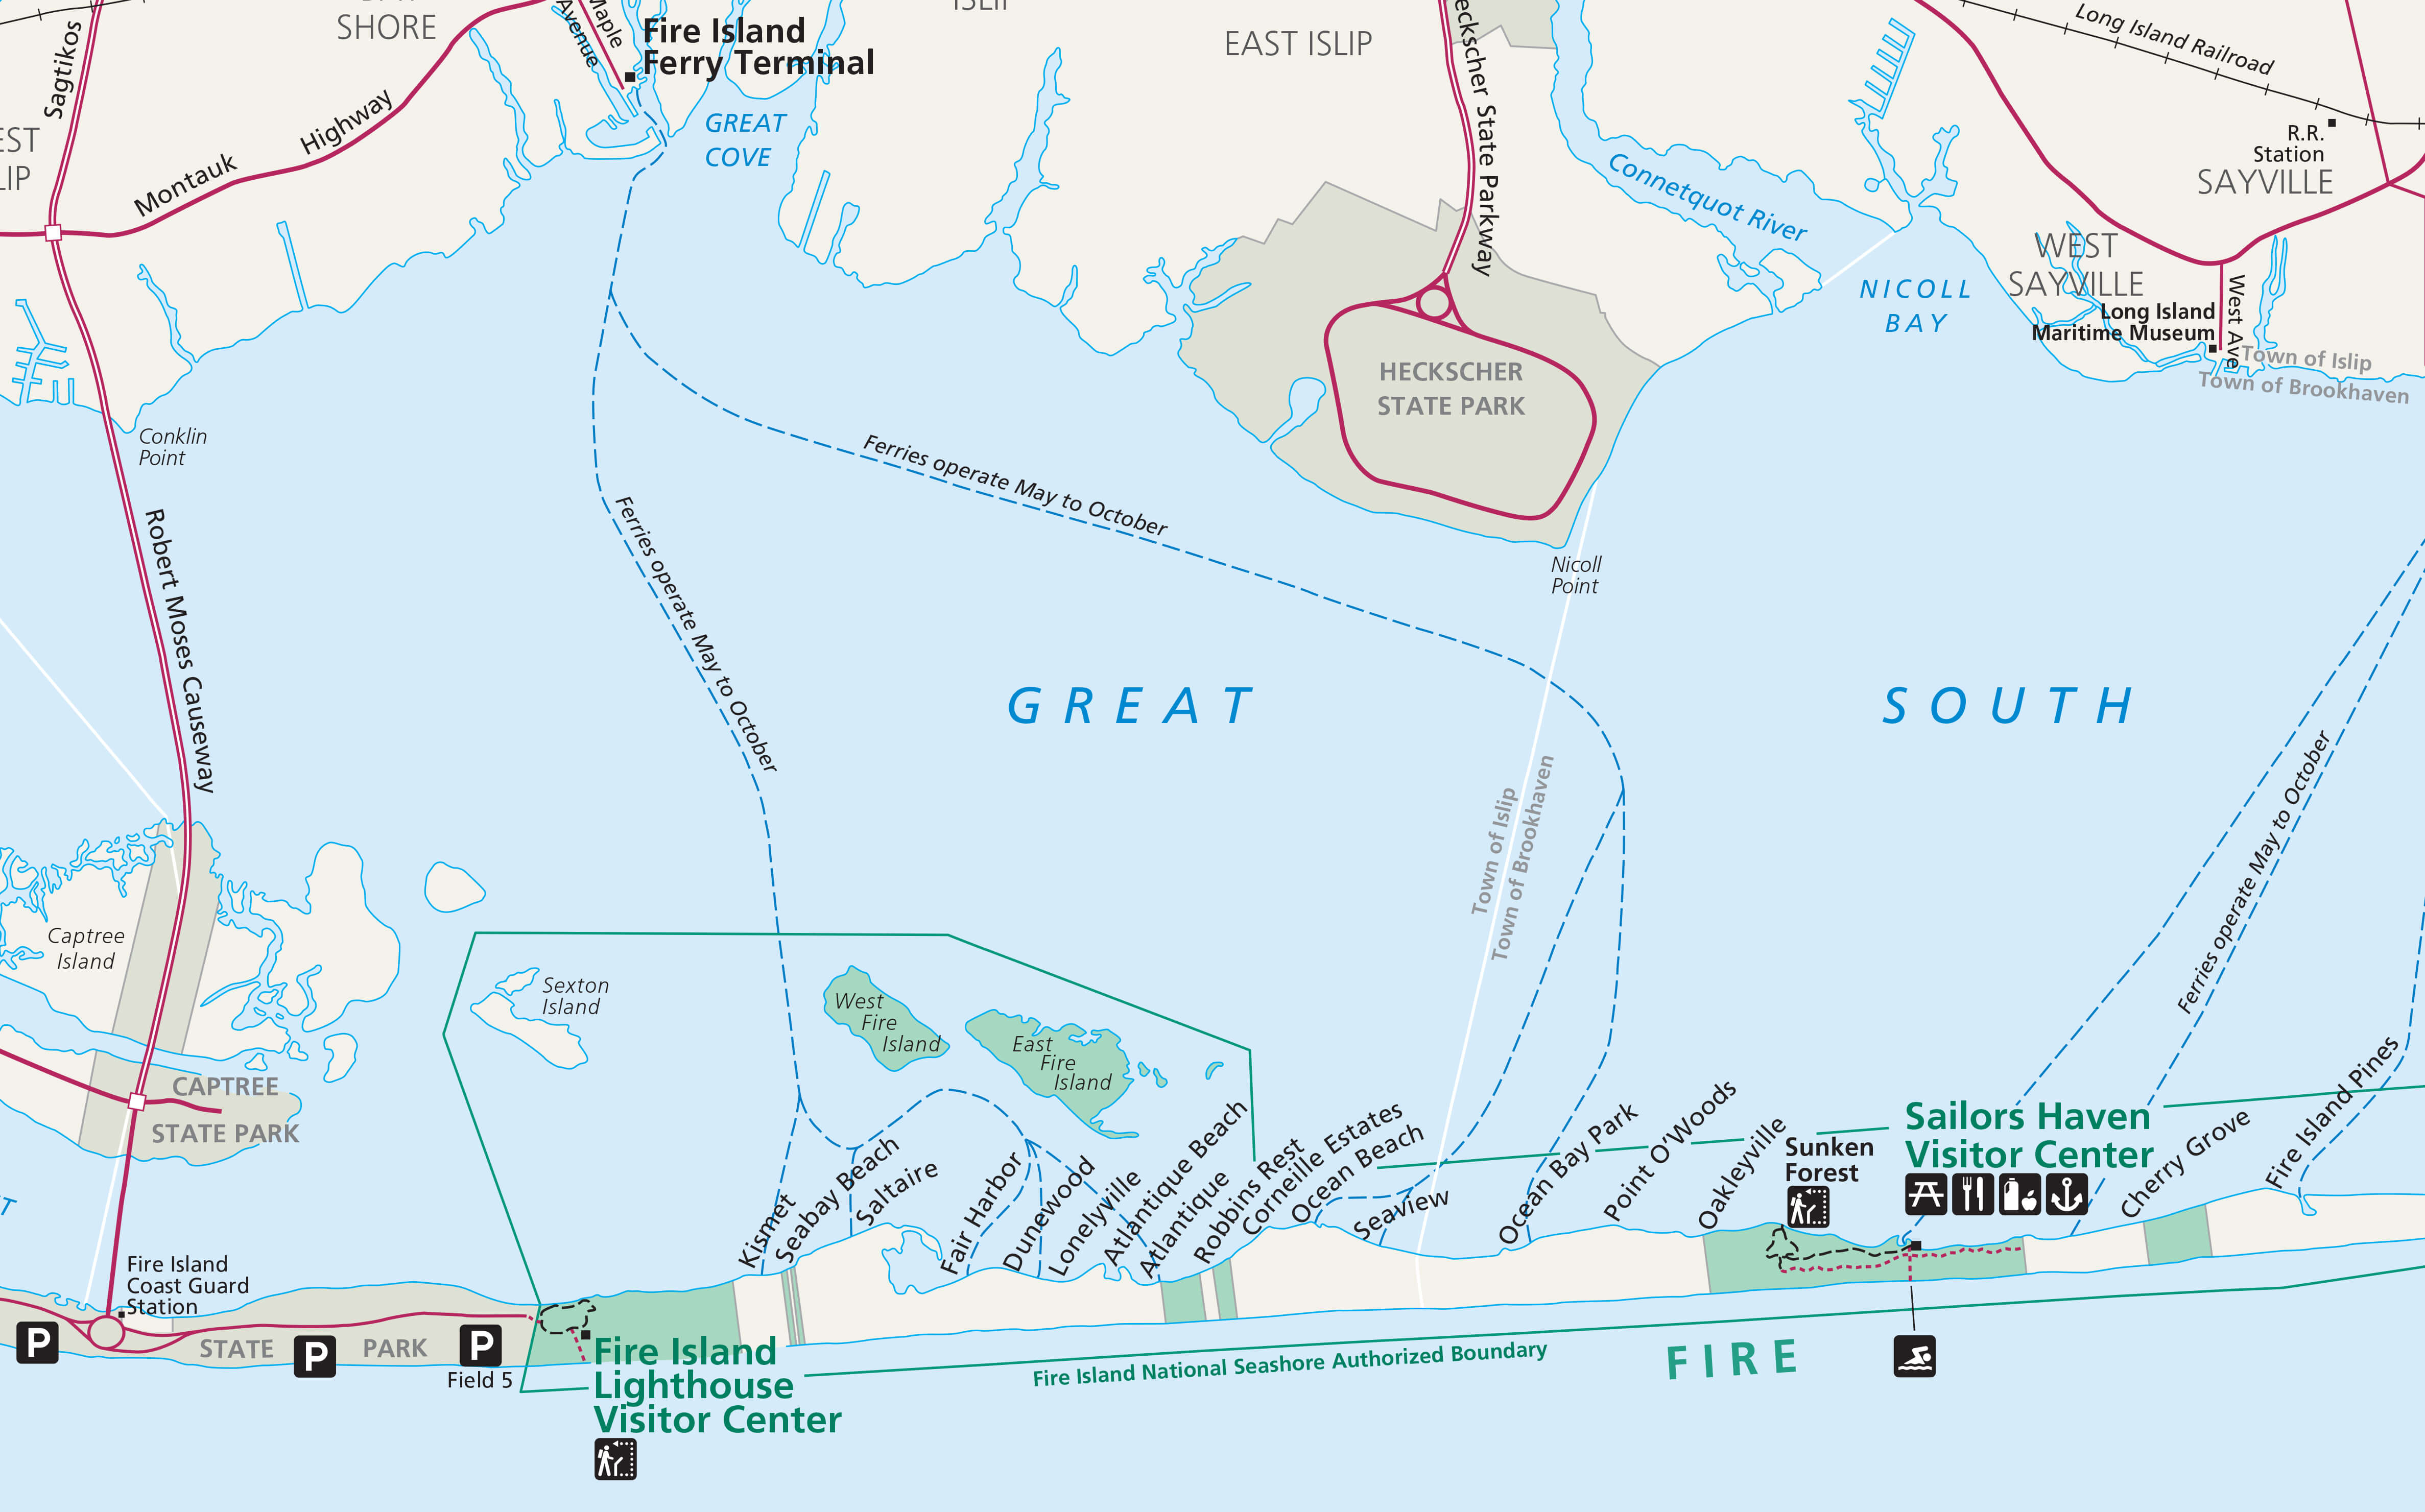 visit fire island summer guide map detail